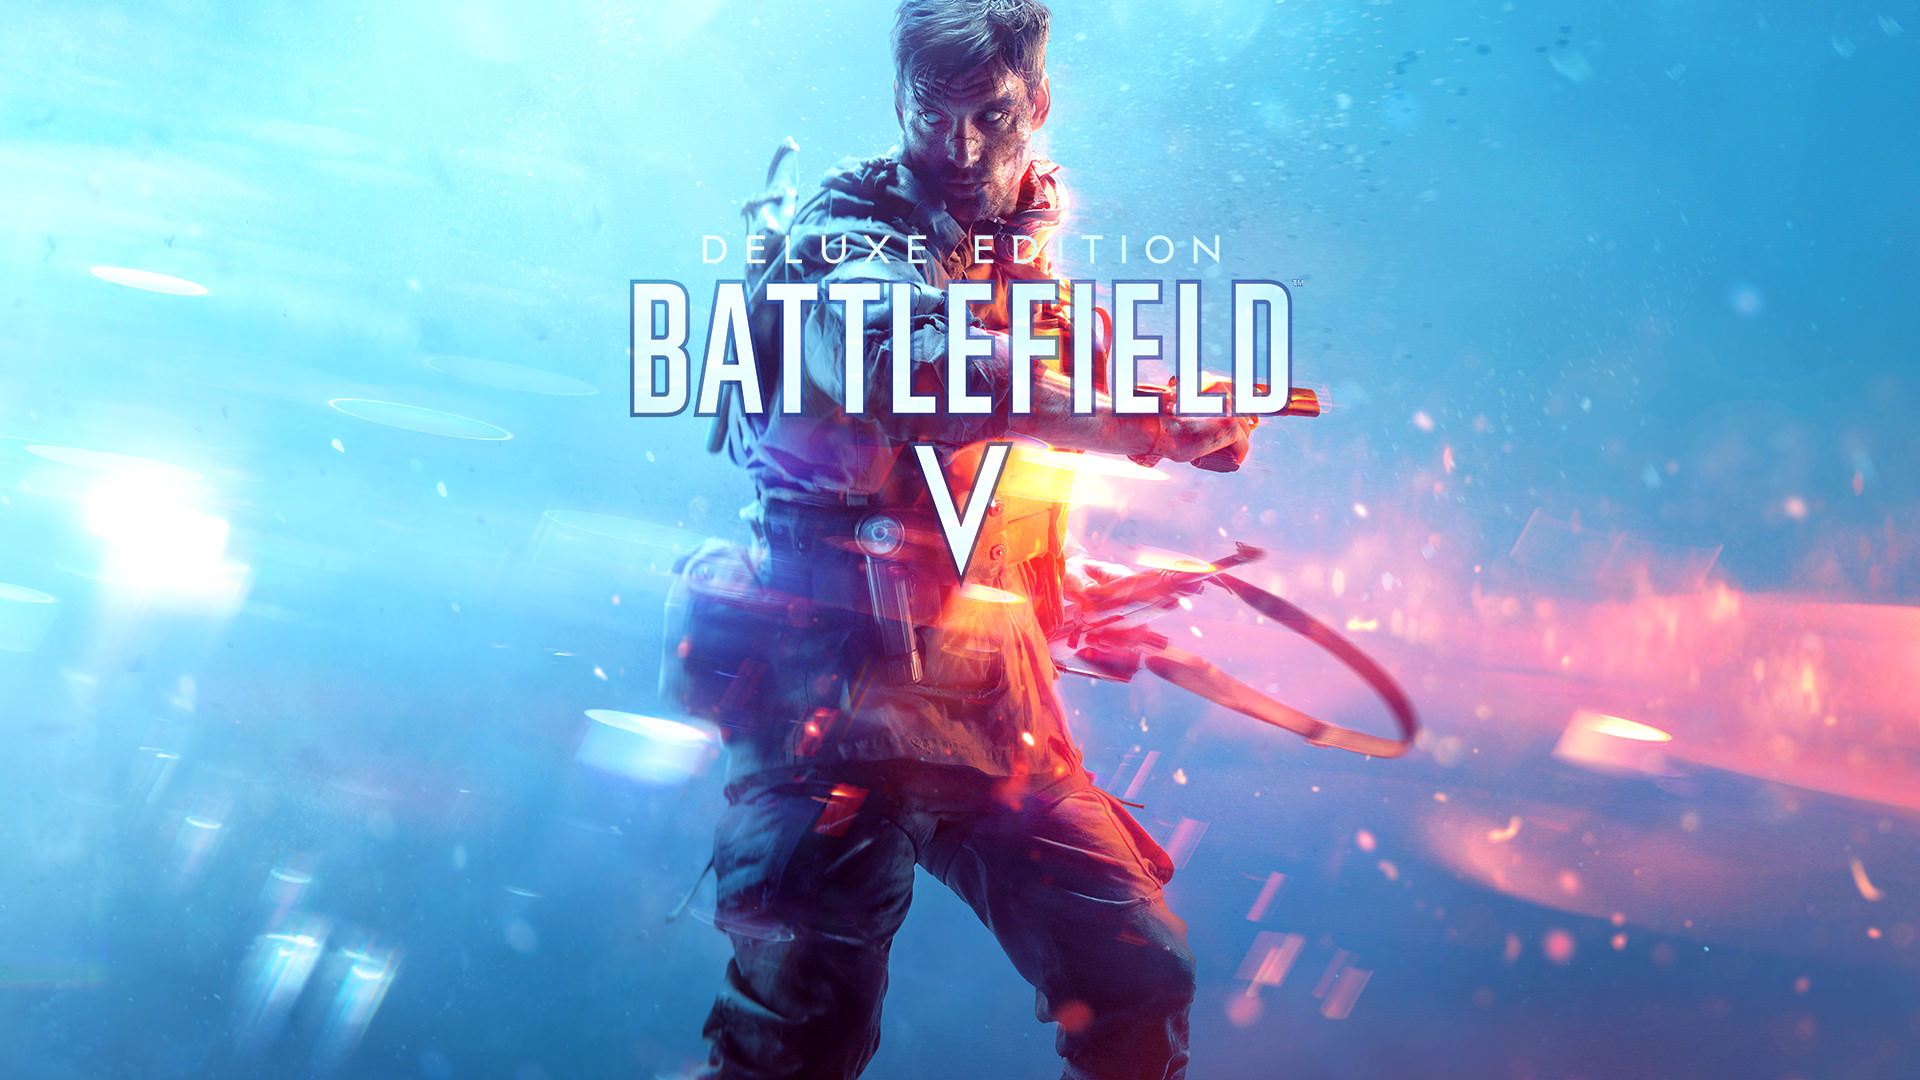 Video Game Battlefield V Wallpaper